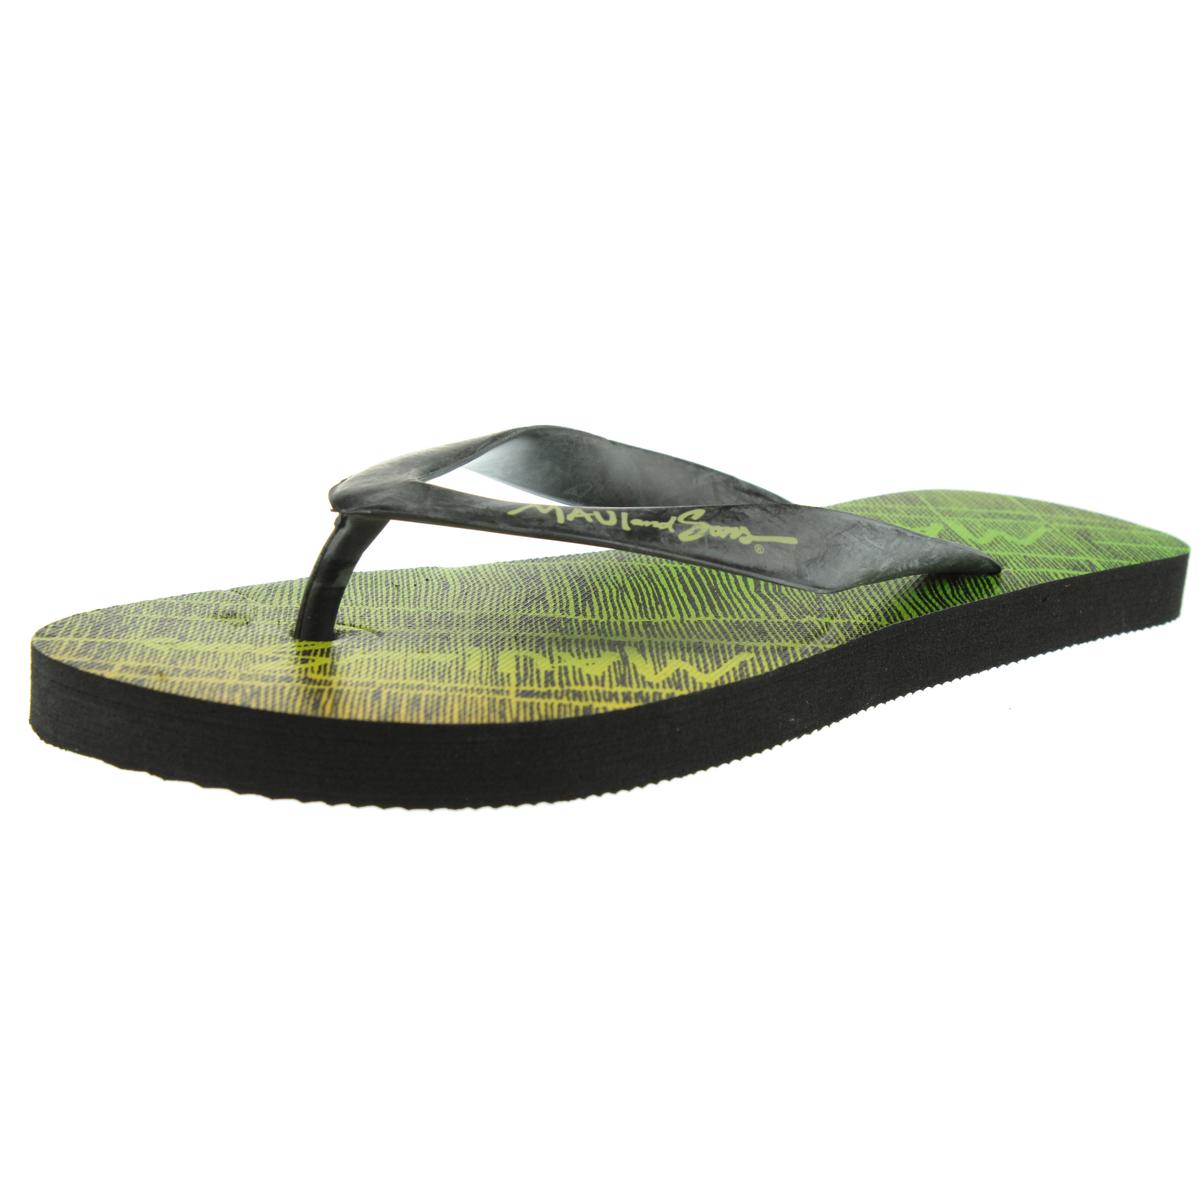 Maui and Sons 6946 Mens Graphic Slide Flip-Flops Sandals BHFO | eBay